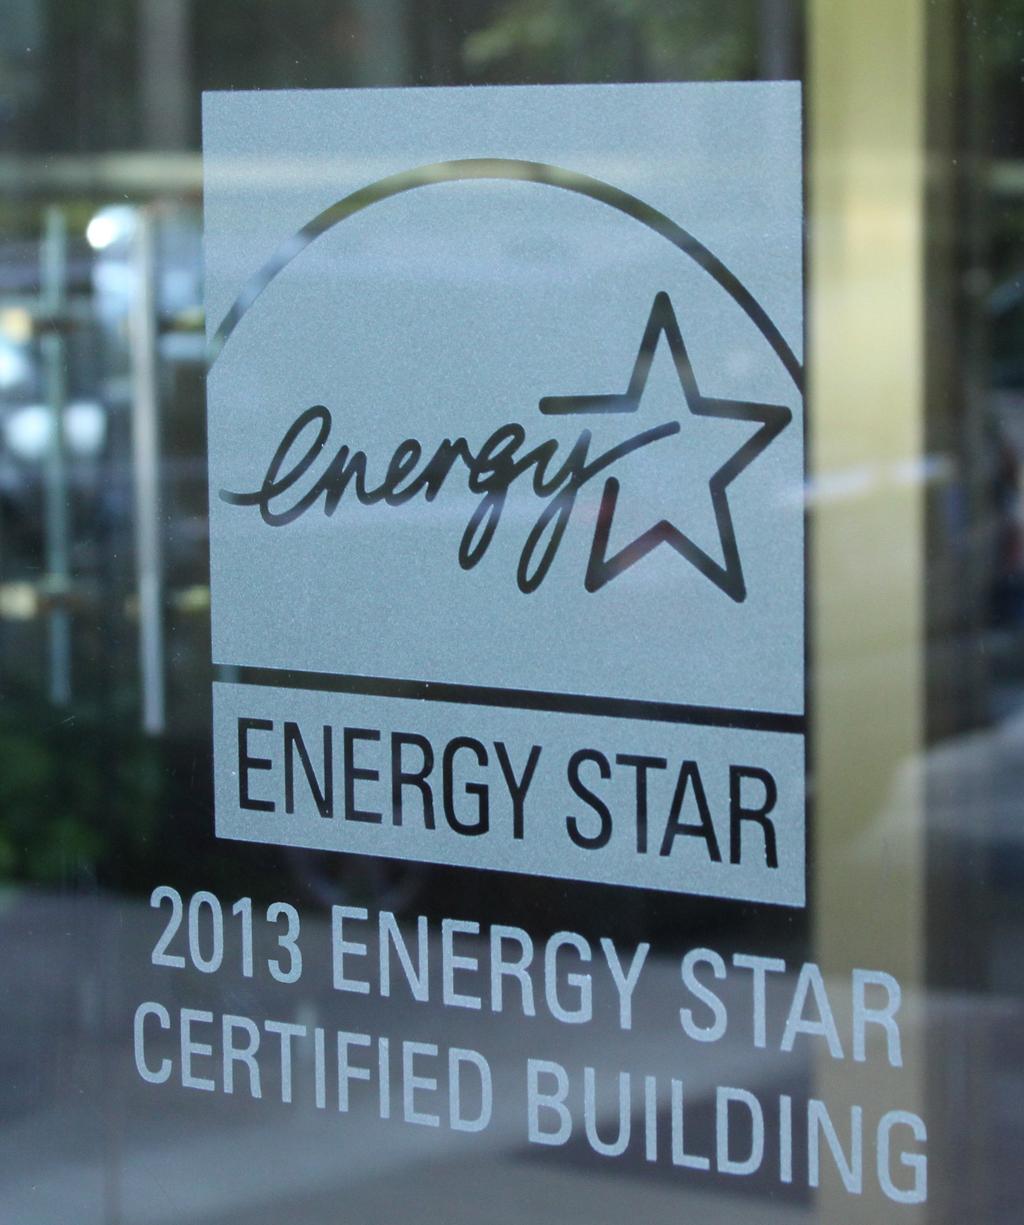 use using Energy Star Portfolio Manager and